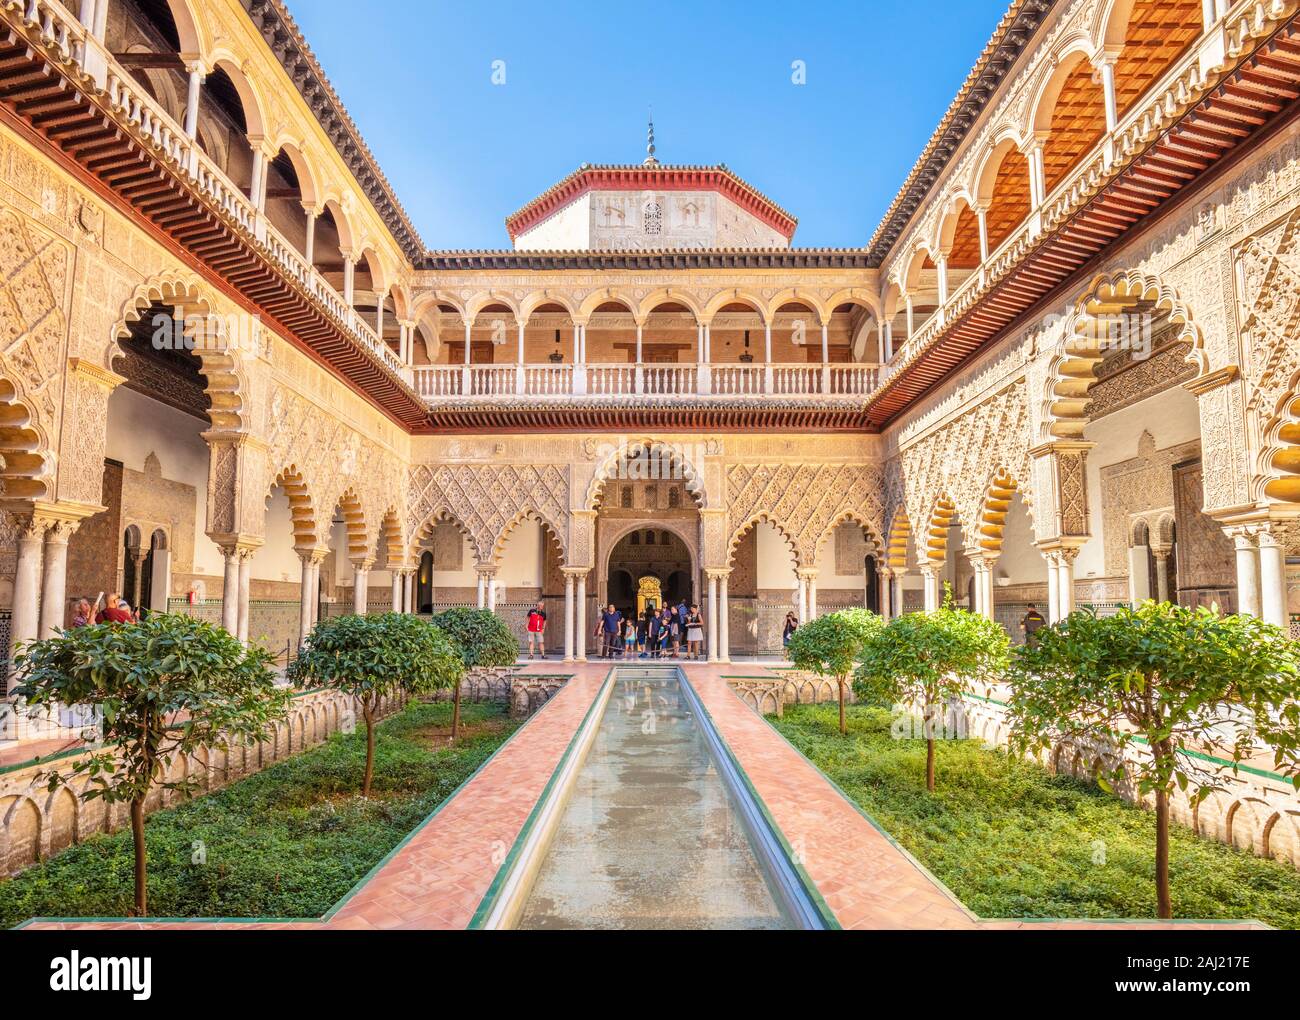 Patio de las Doncellas (The Courtyard of the Maidens), Real Alcazar (Royal Palace), UNESCO, Seville, Andalusia, Spain, Europe Stock Photo